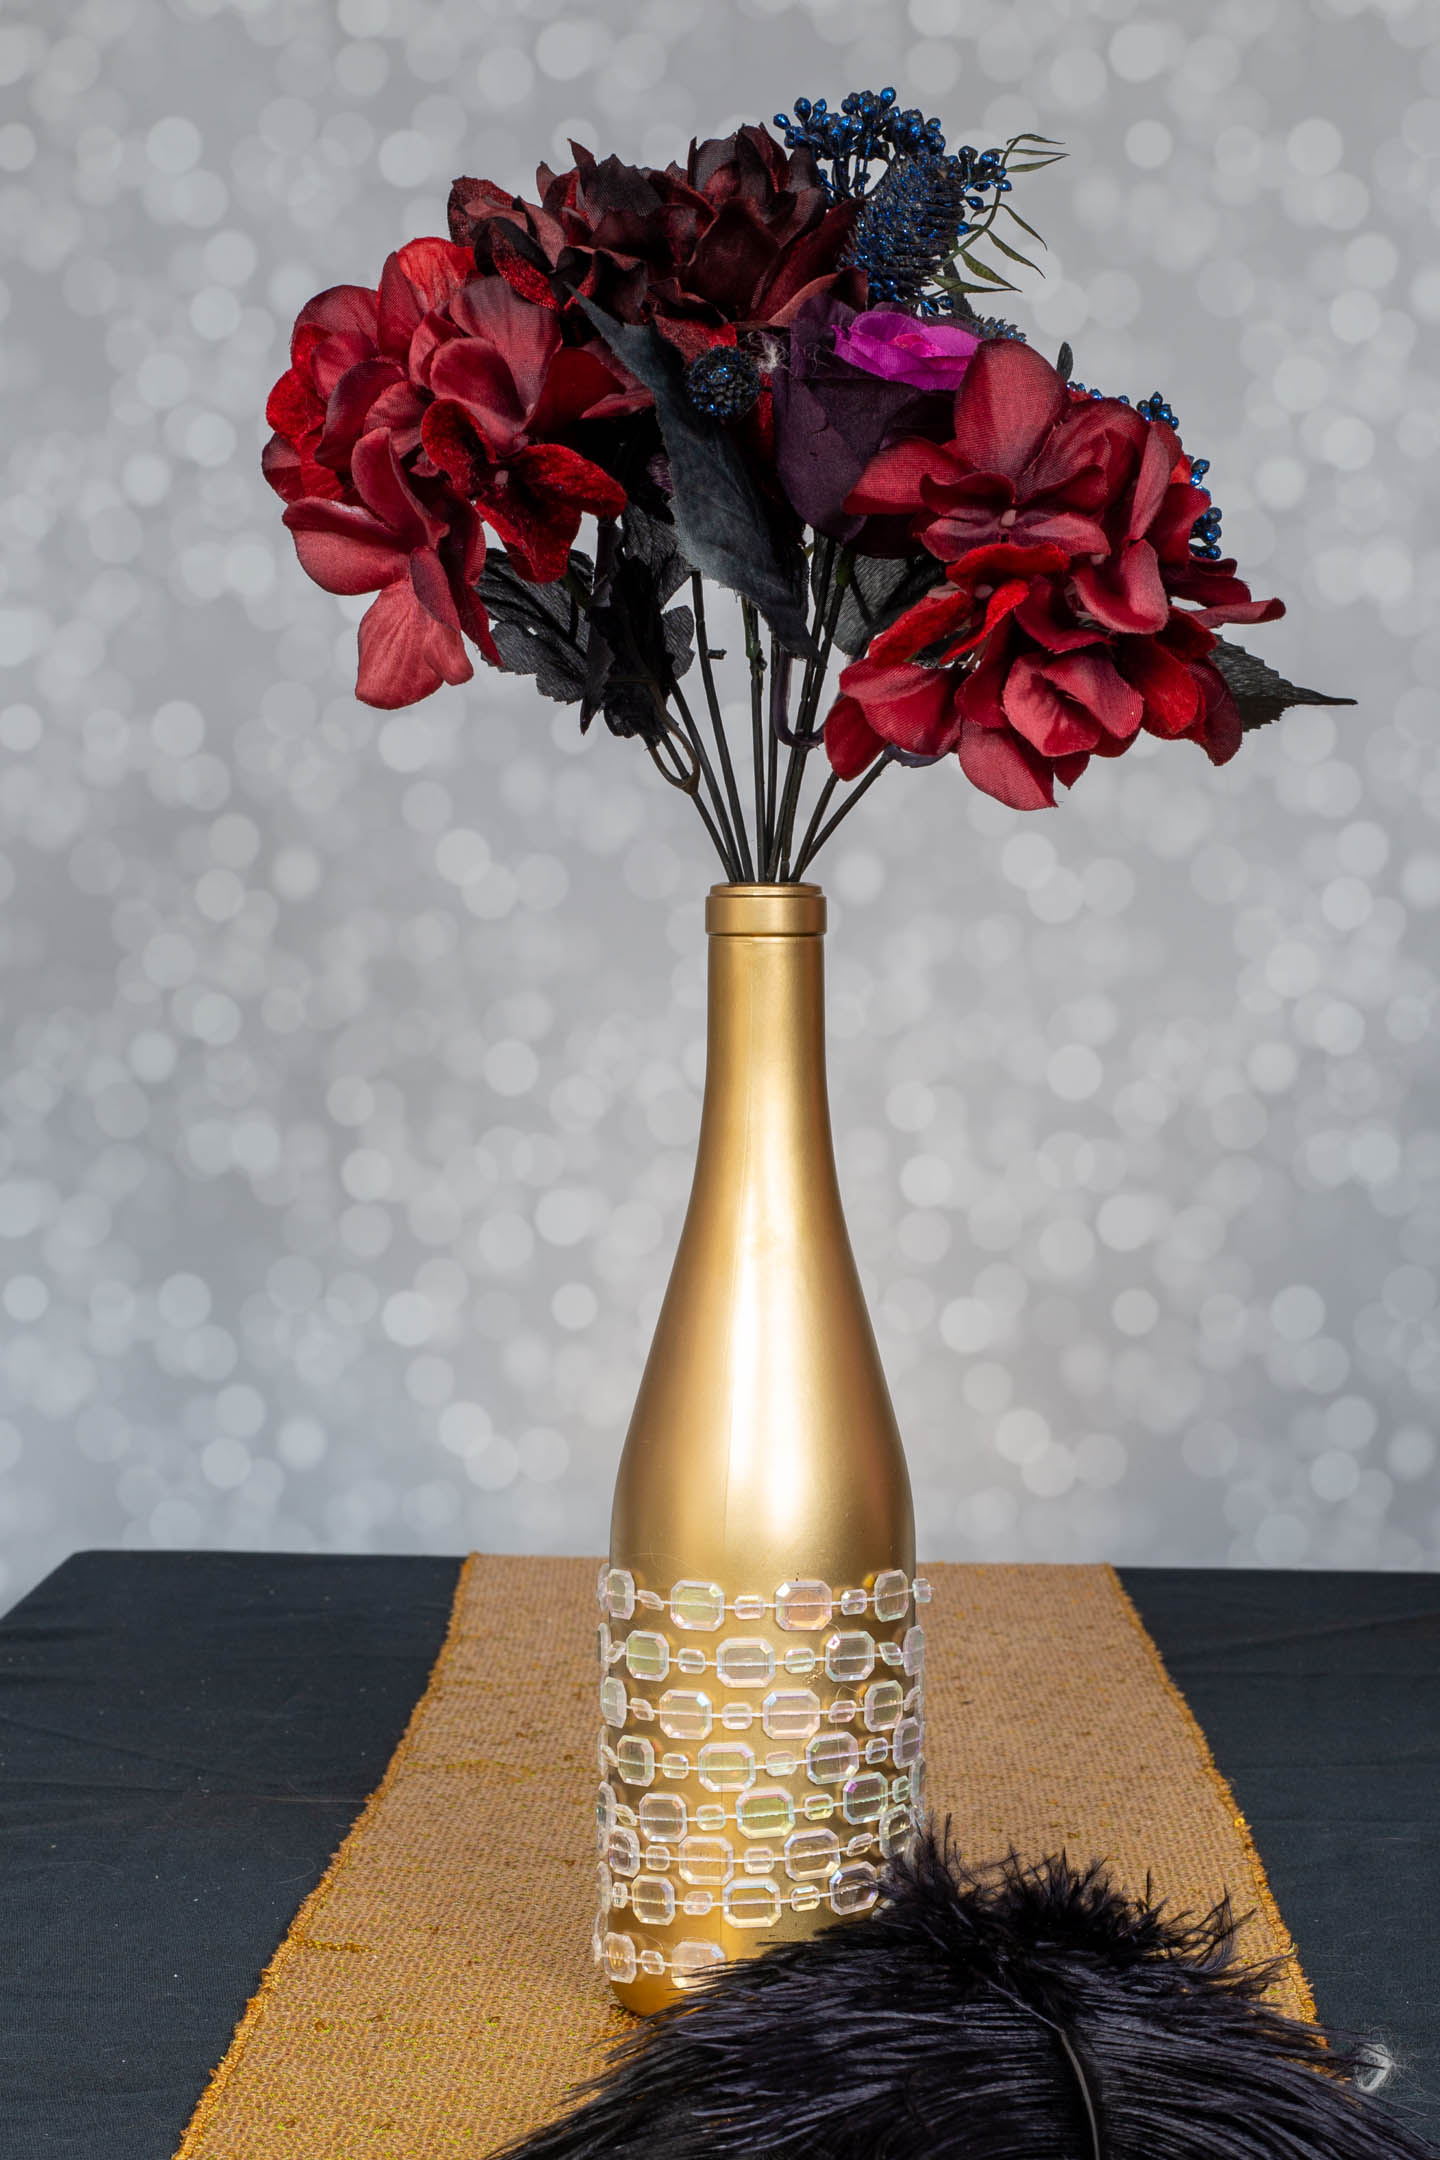 Embellished wine bottle with a faux flower arrangement